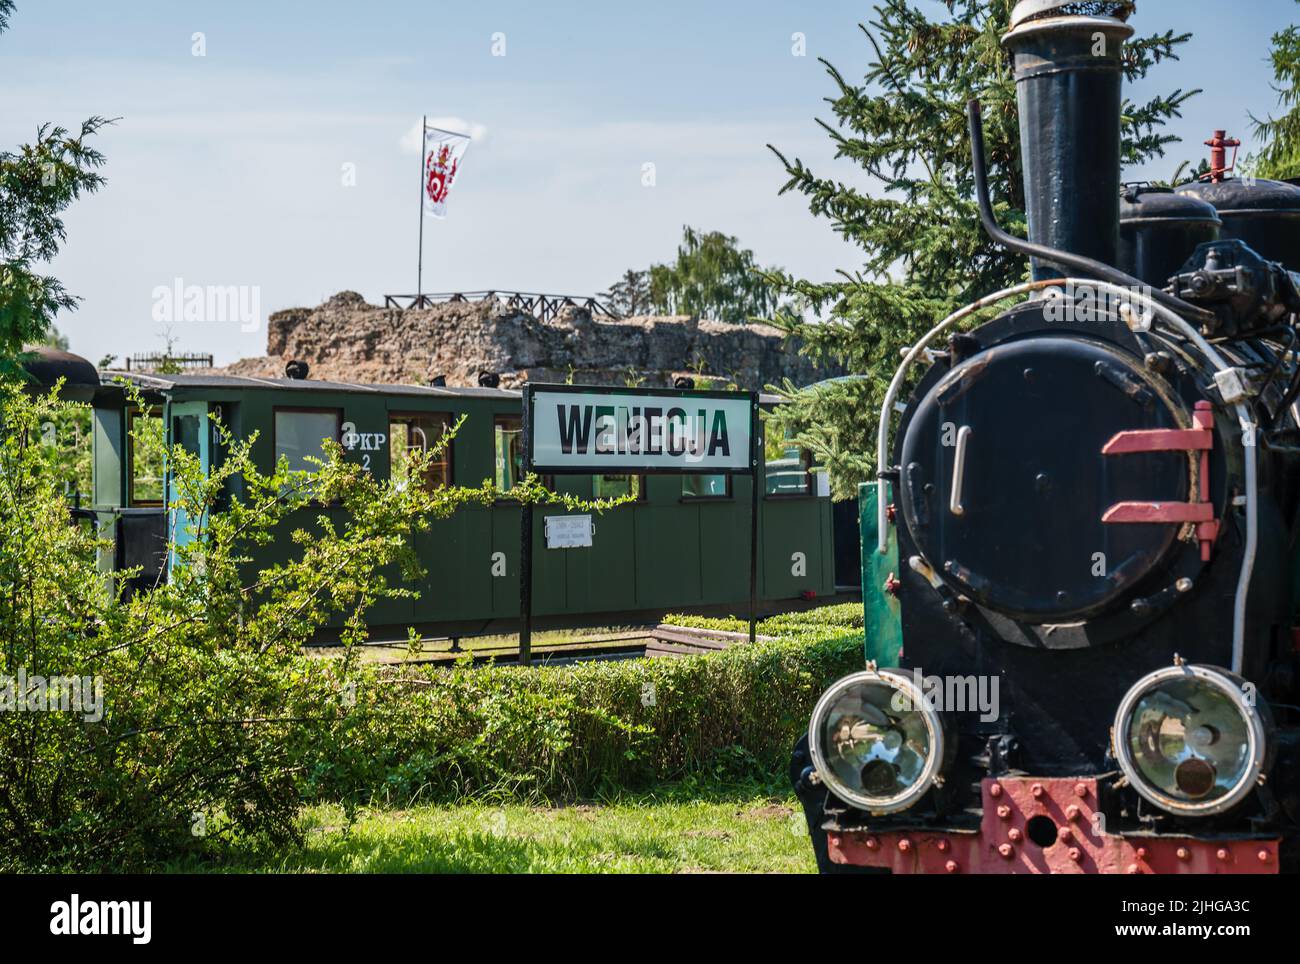 Wenecja, Poland - August 2020 : Old locomotive in narrow gauge train museum Stock Photo